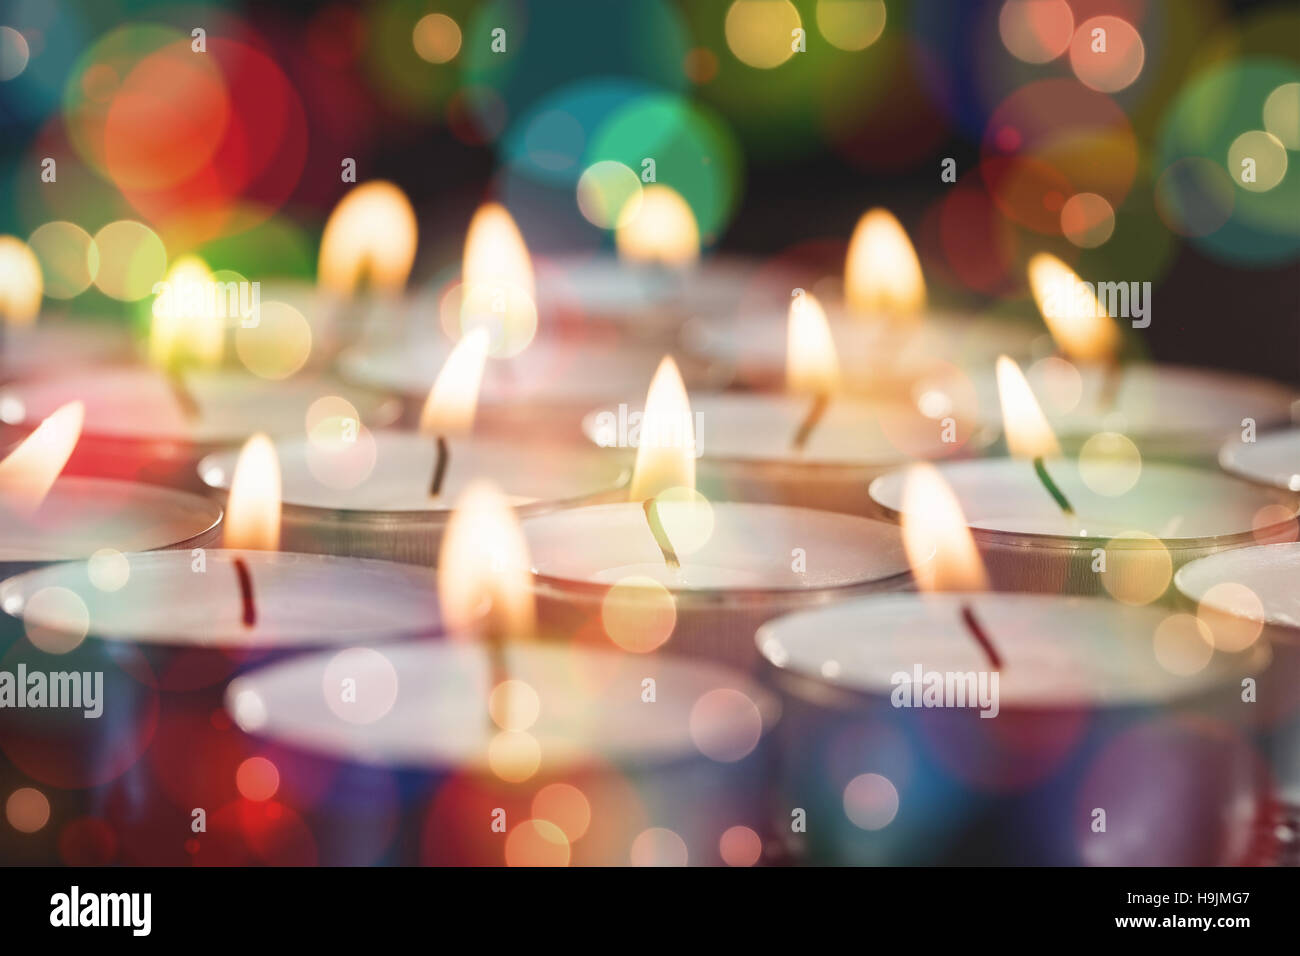 Candles burning during christmas Stock Photo